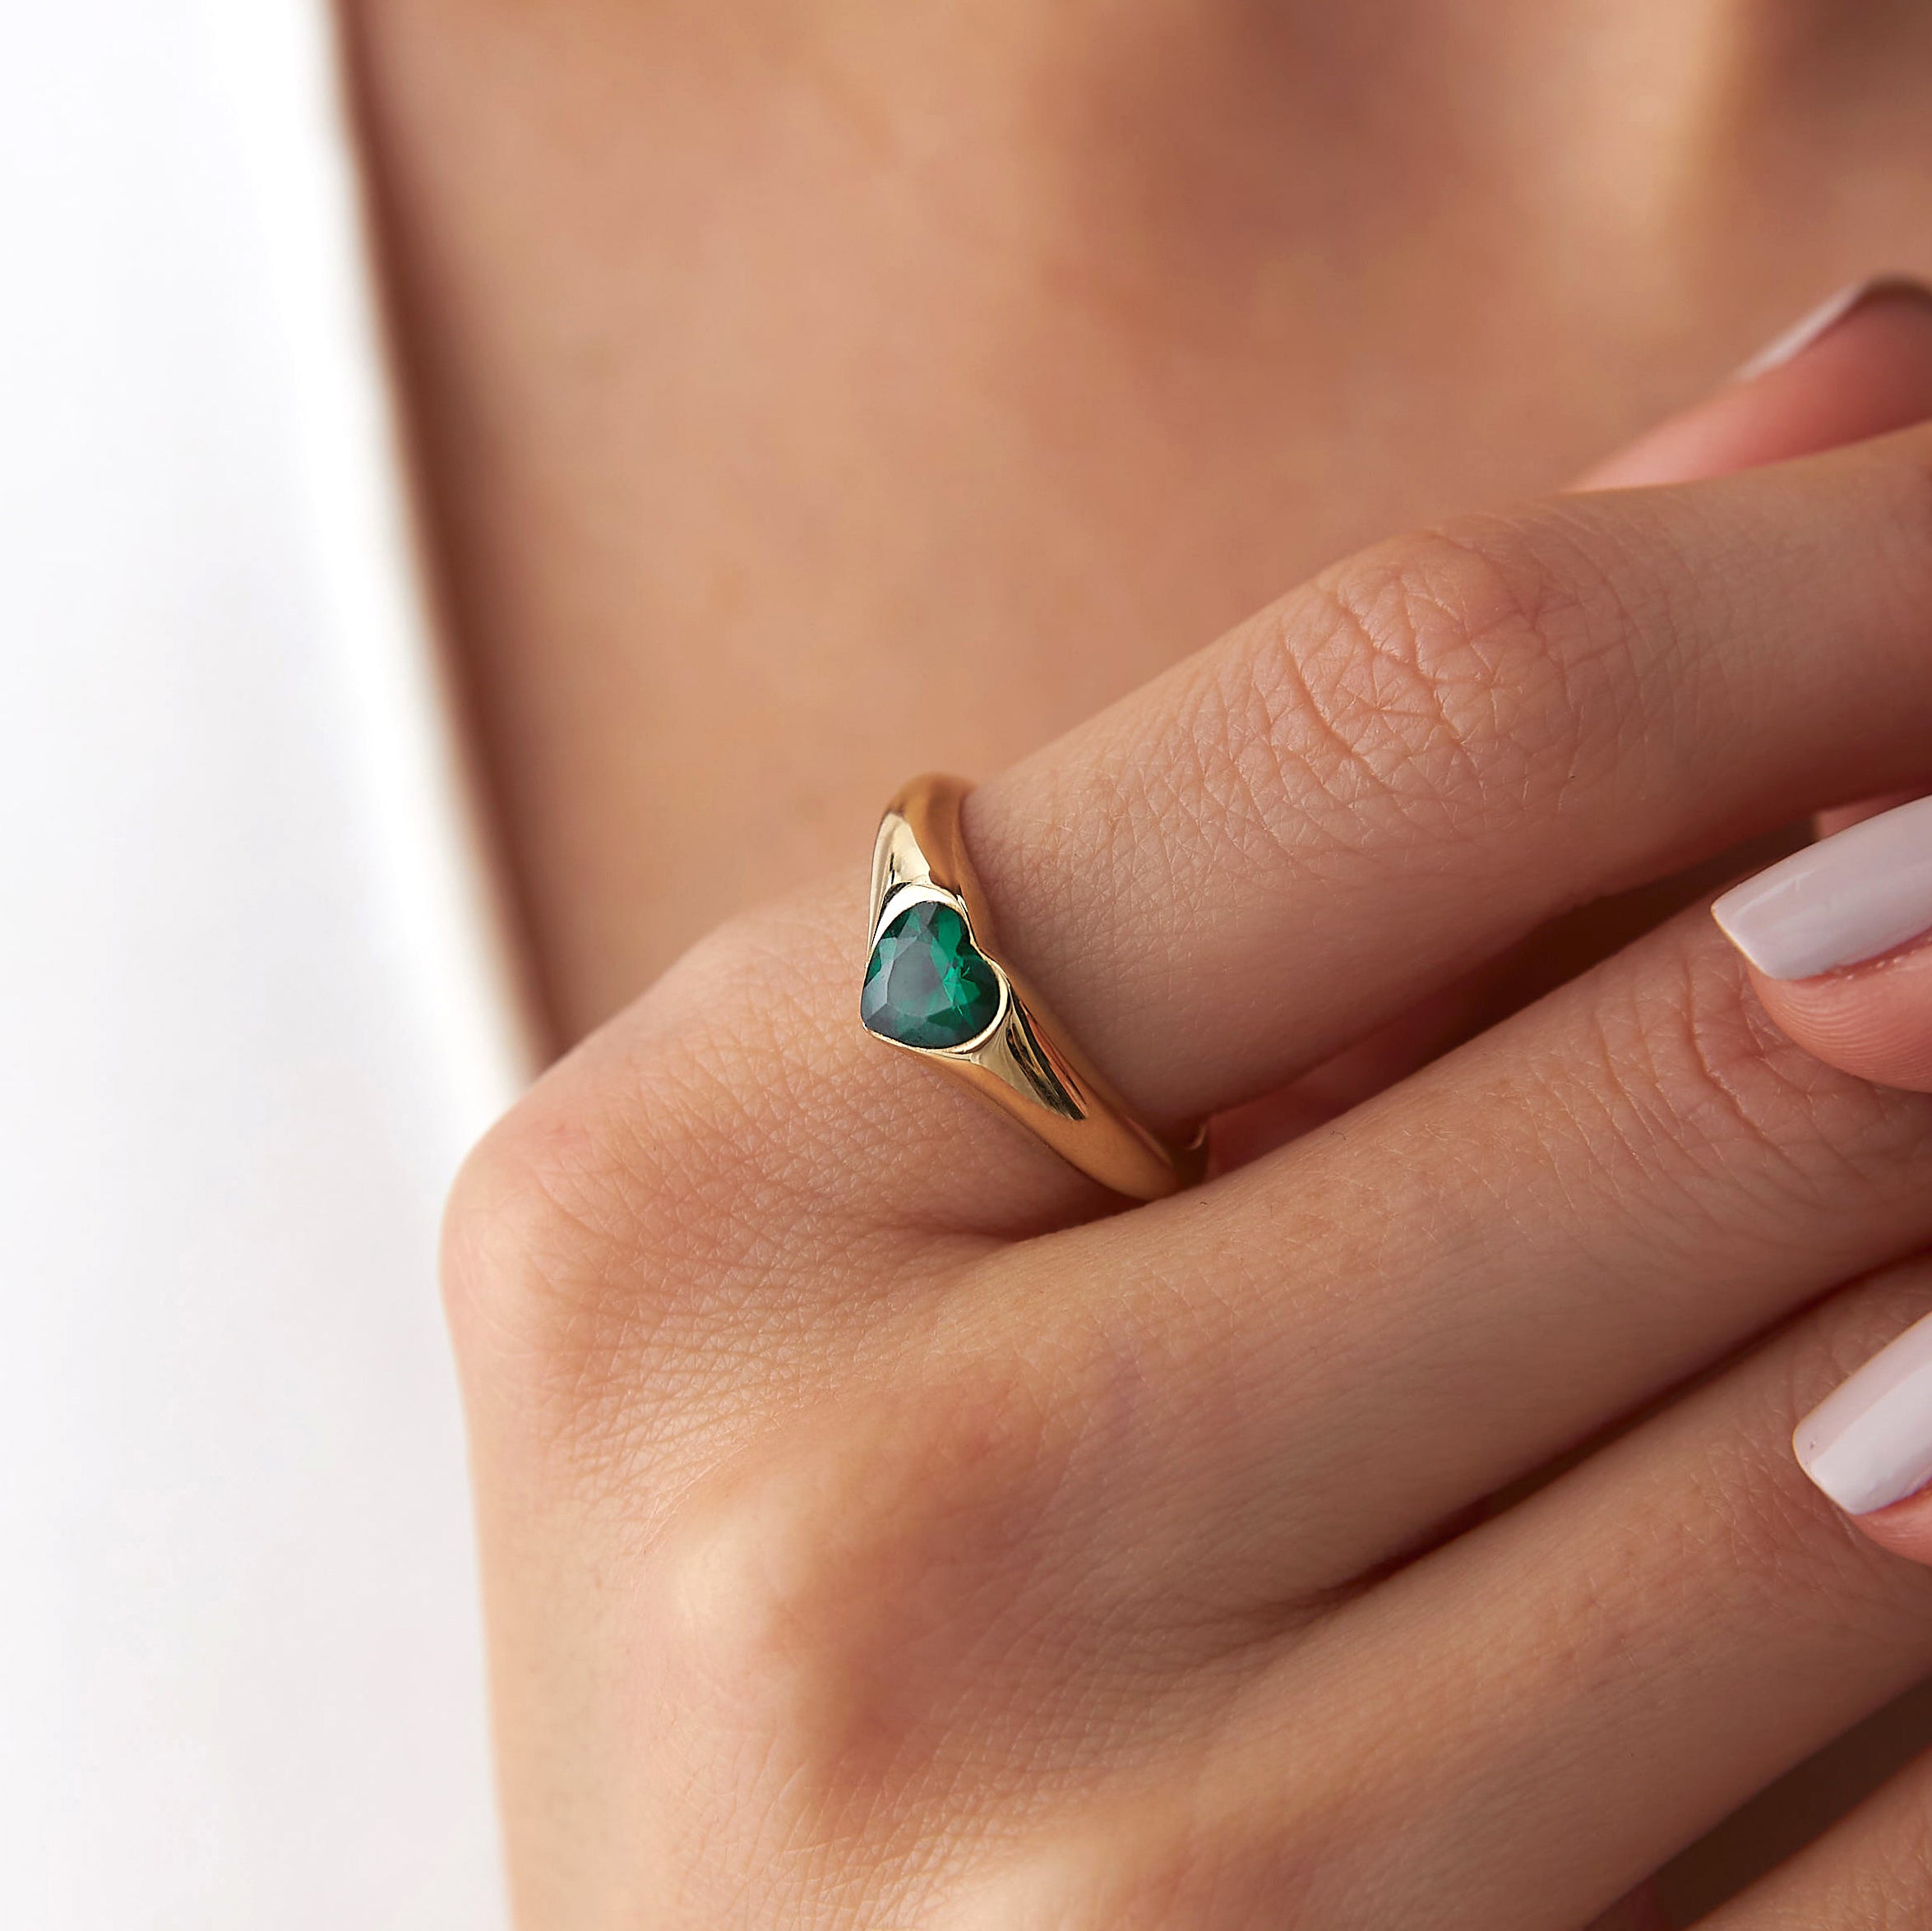 Green Heart Cut Gemstone Ring in 14K Gold